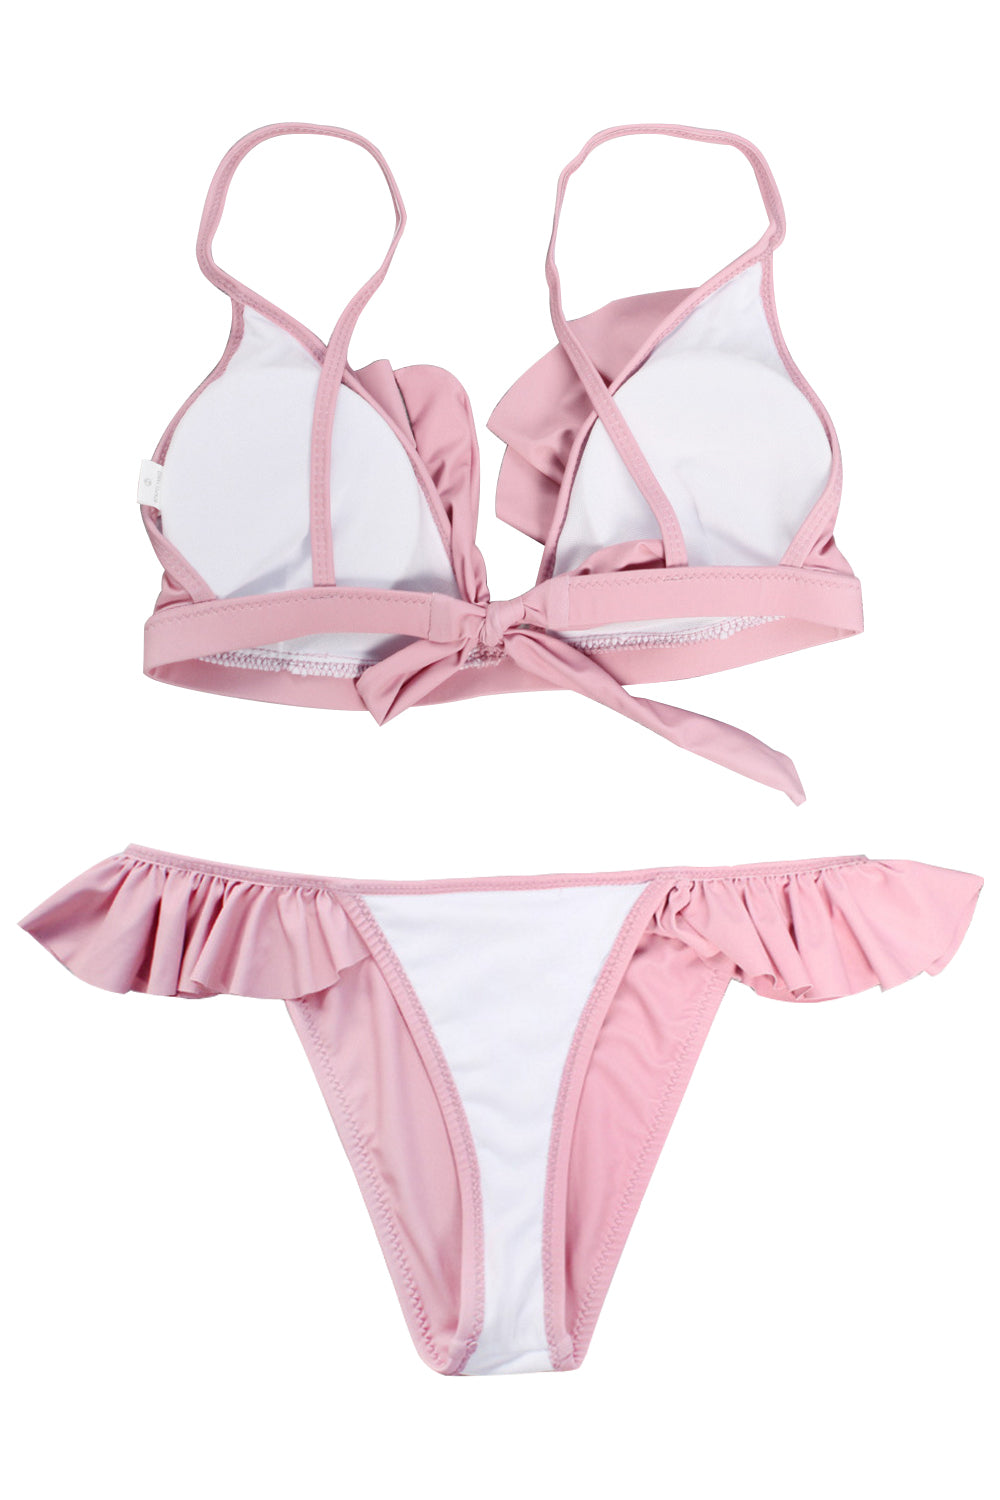 Iyasson Charming Pink Falbala Bikini Set